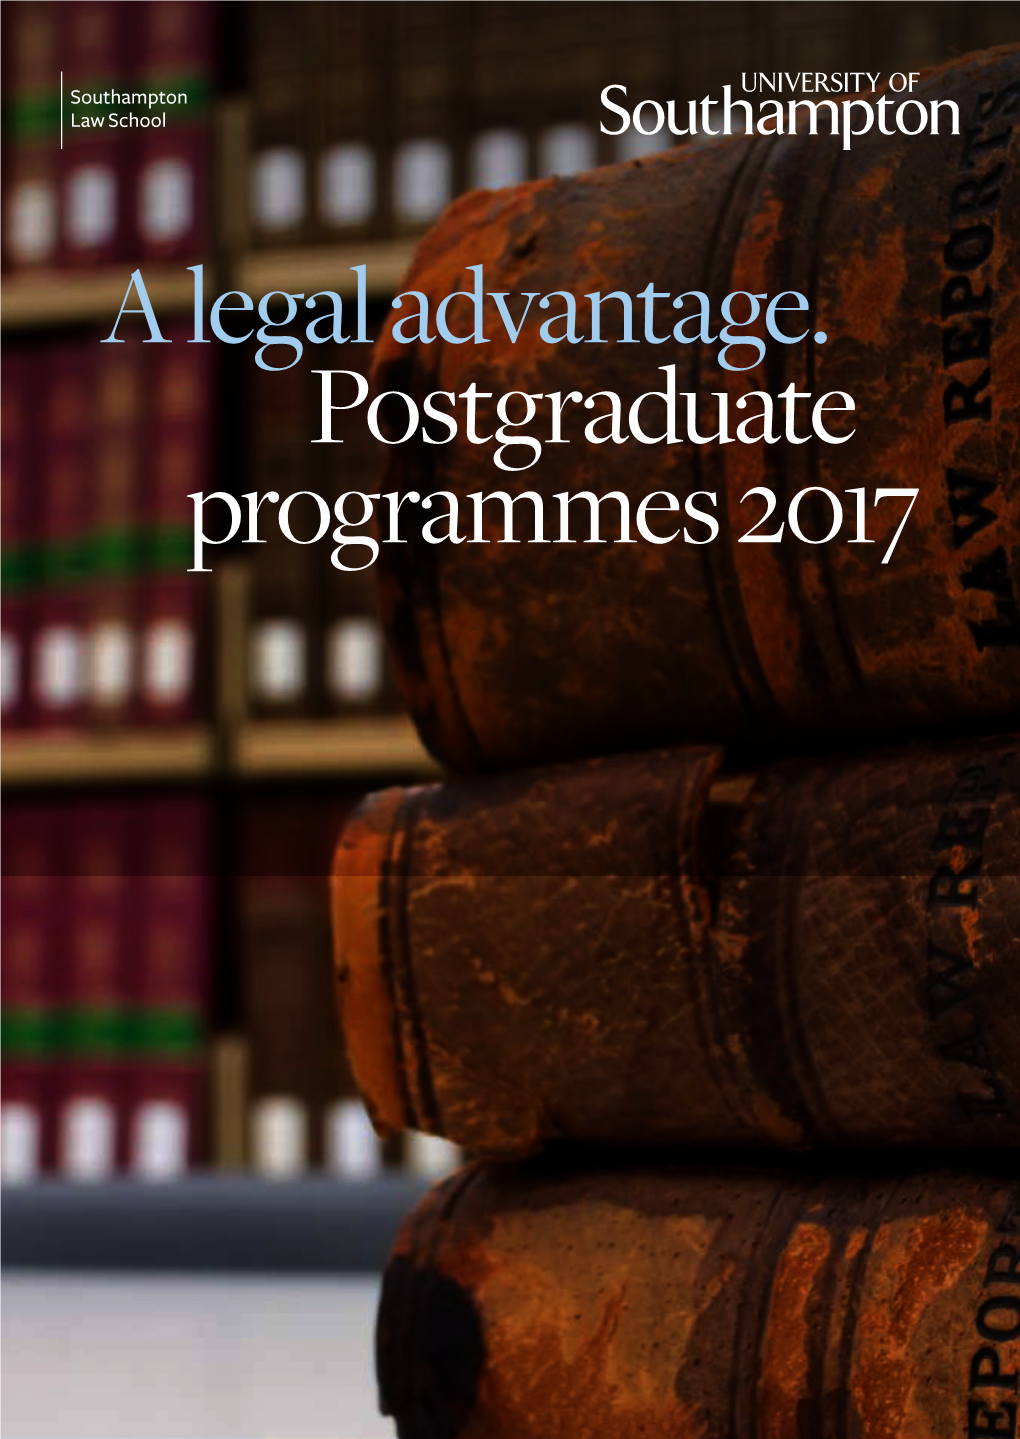 A Legal Advantage. Postgraduate Programmes 2017 Welcome to Southampton Law School